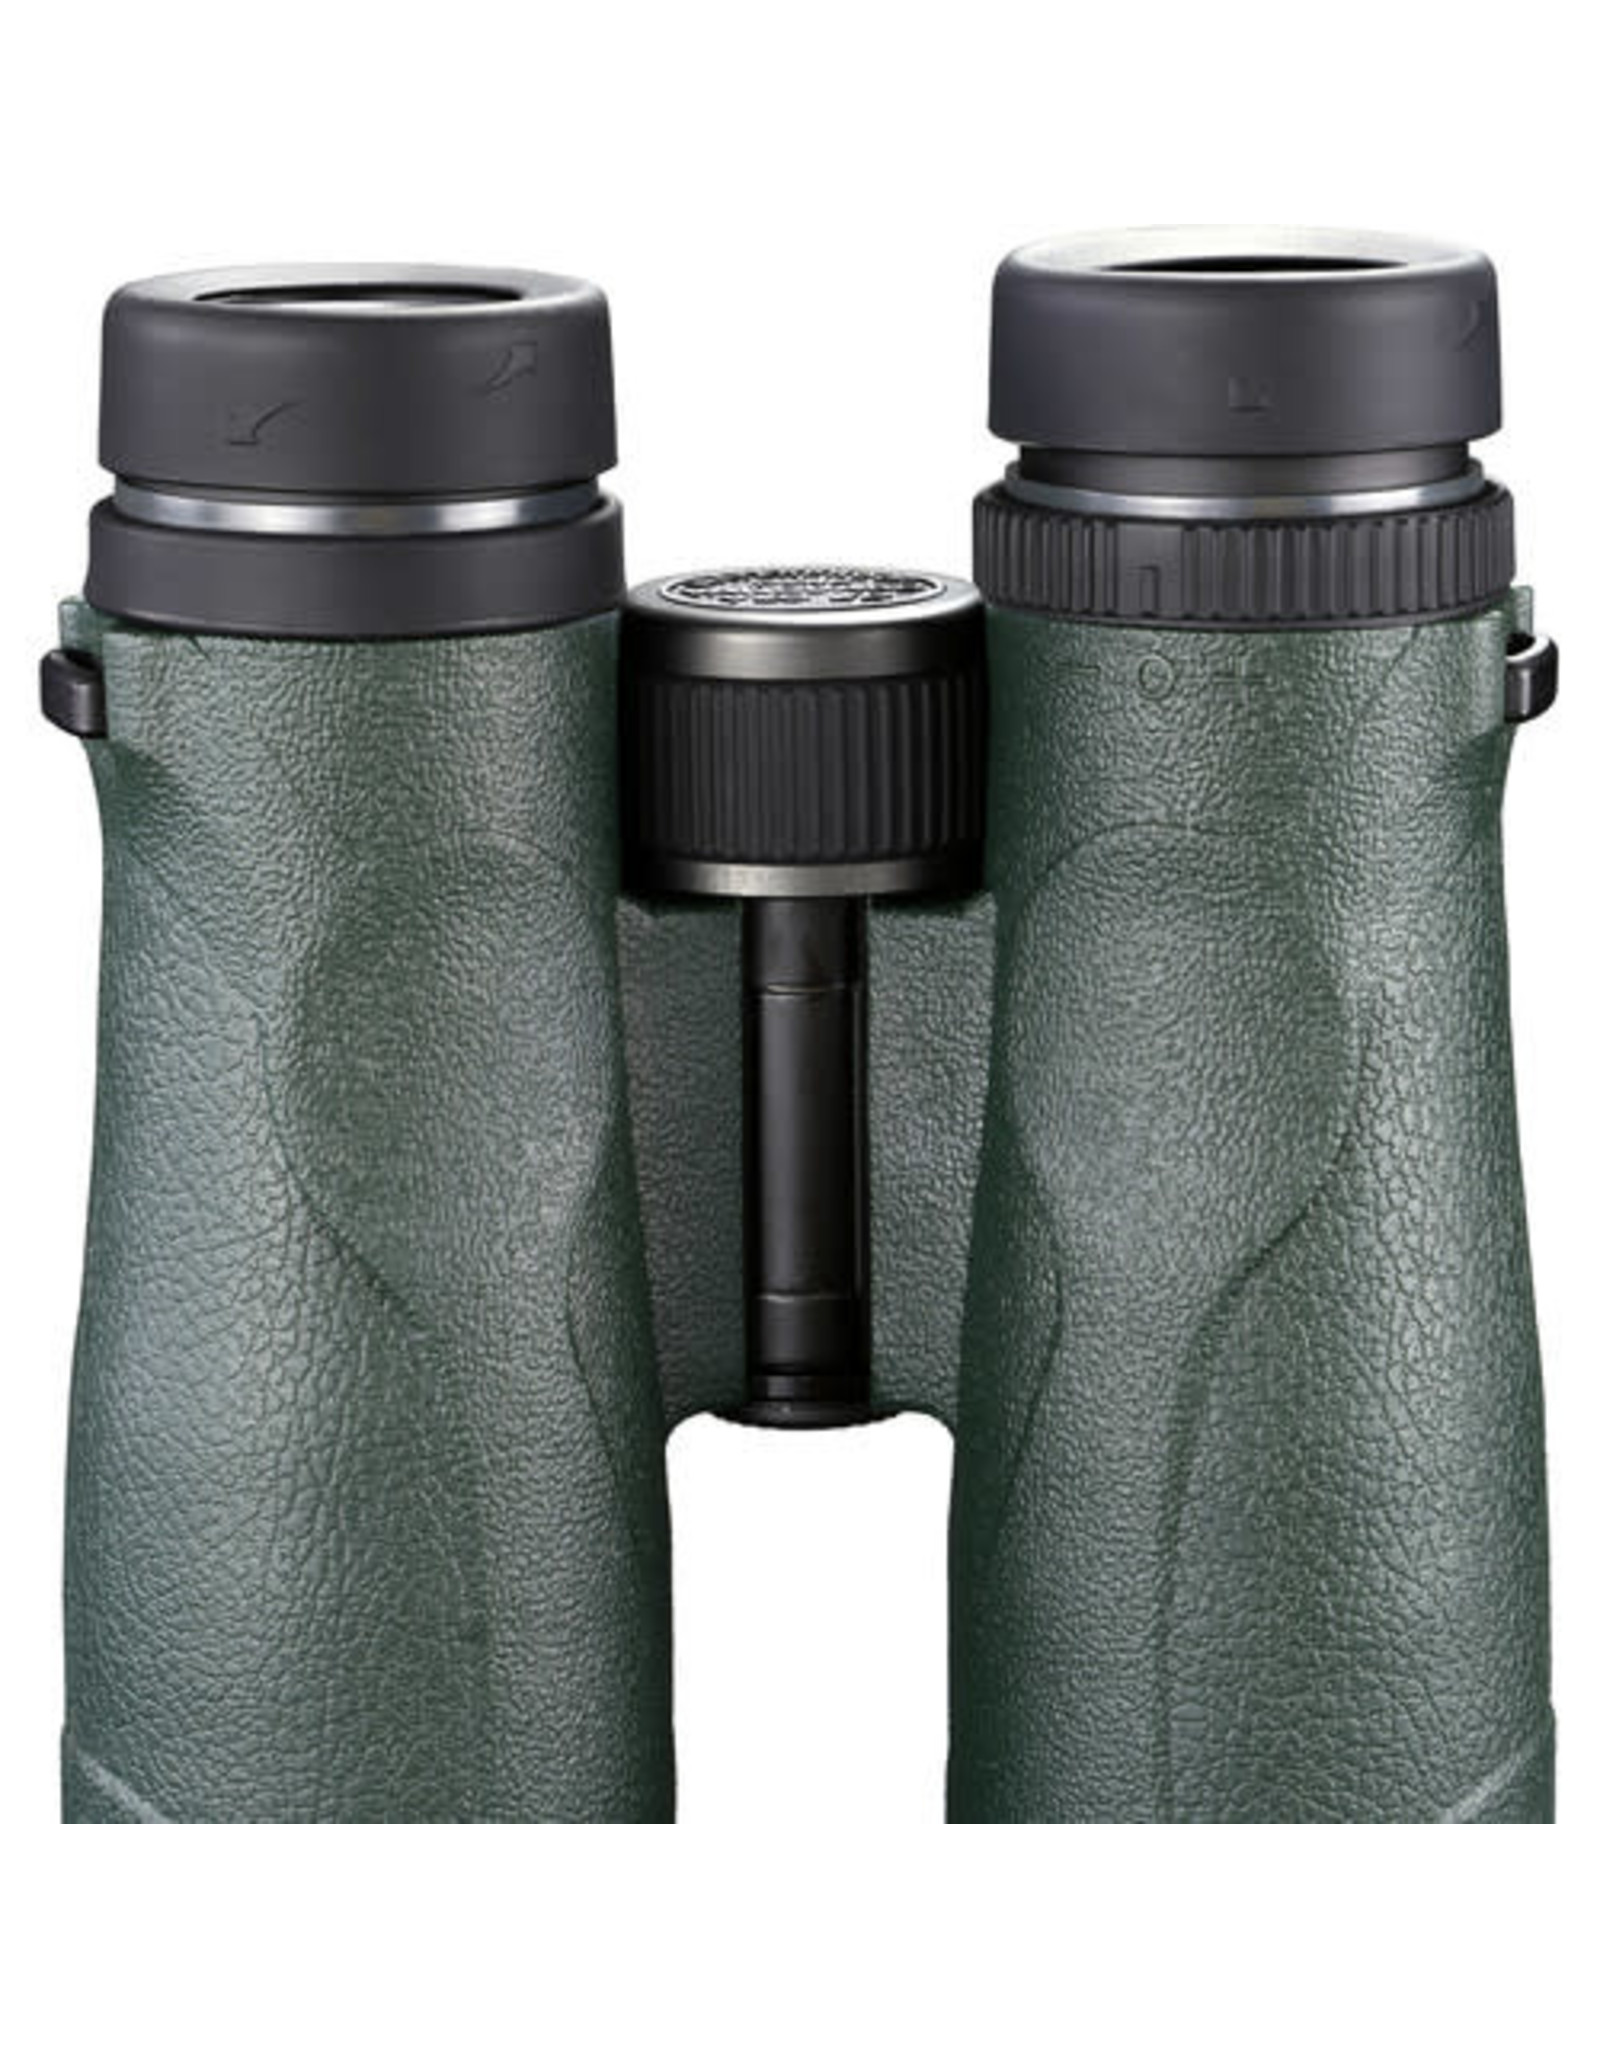 Vanguard Vanguard 10x42 VEO ED Binoculars